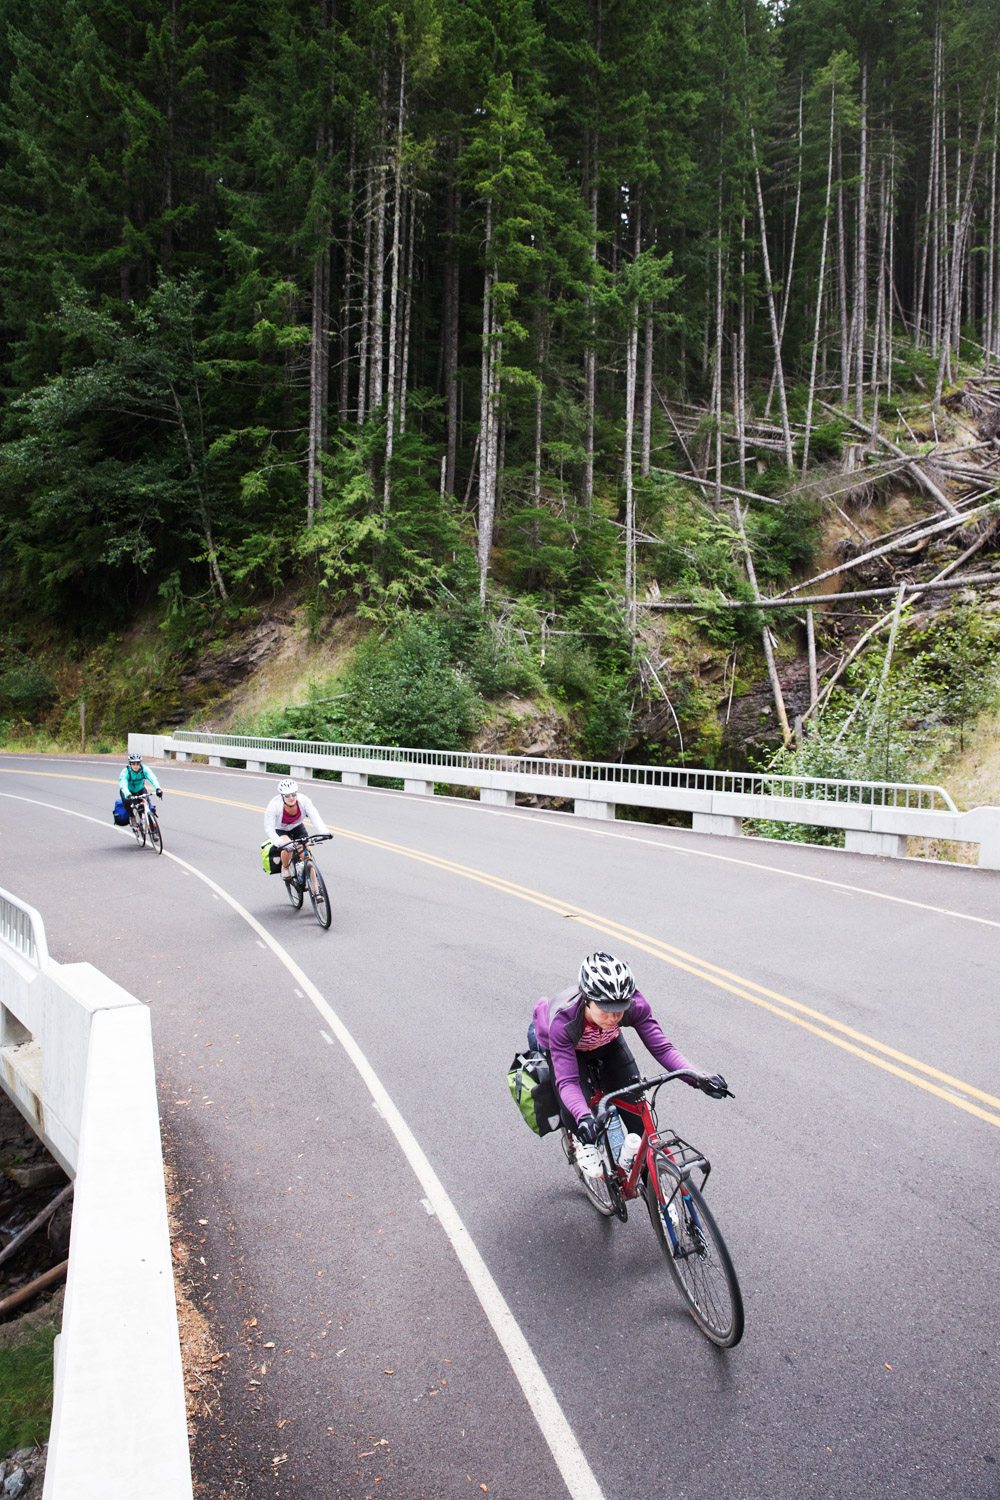  Three road cyclists. Mount St. Helens, WA 